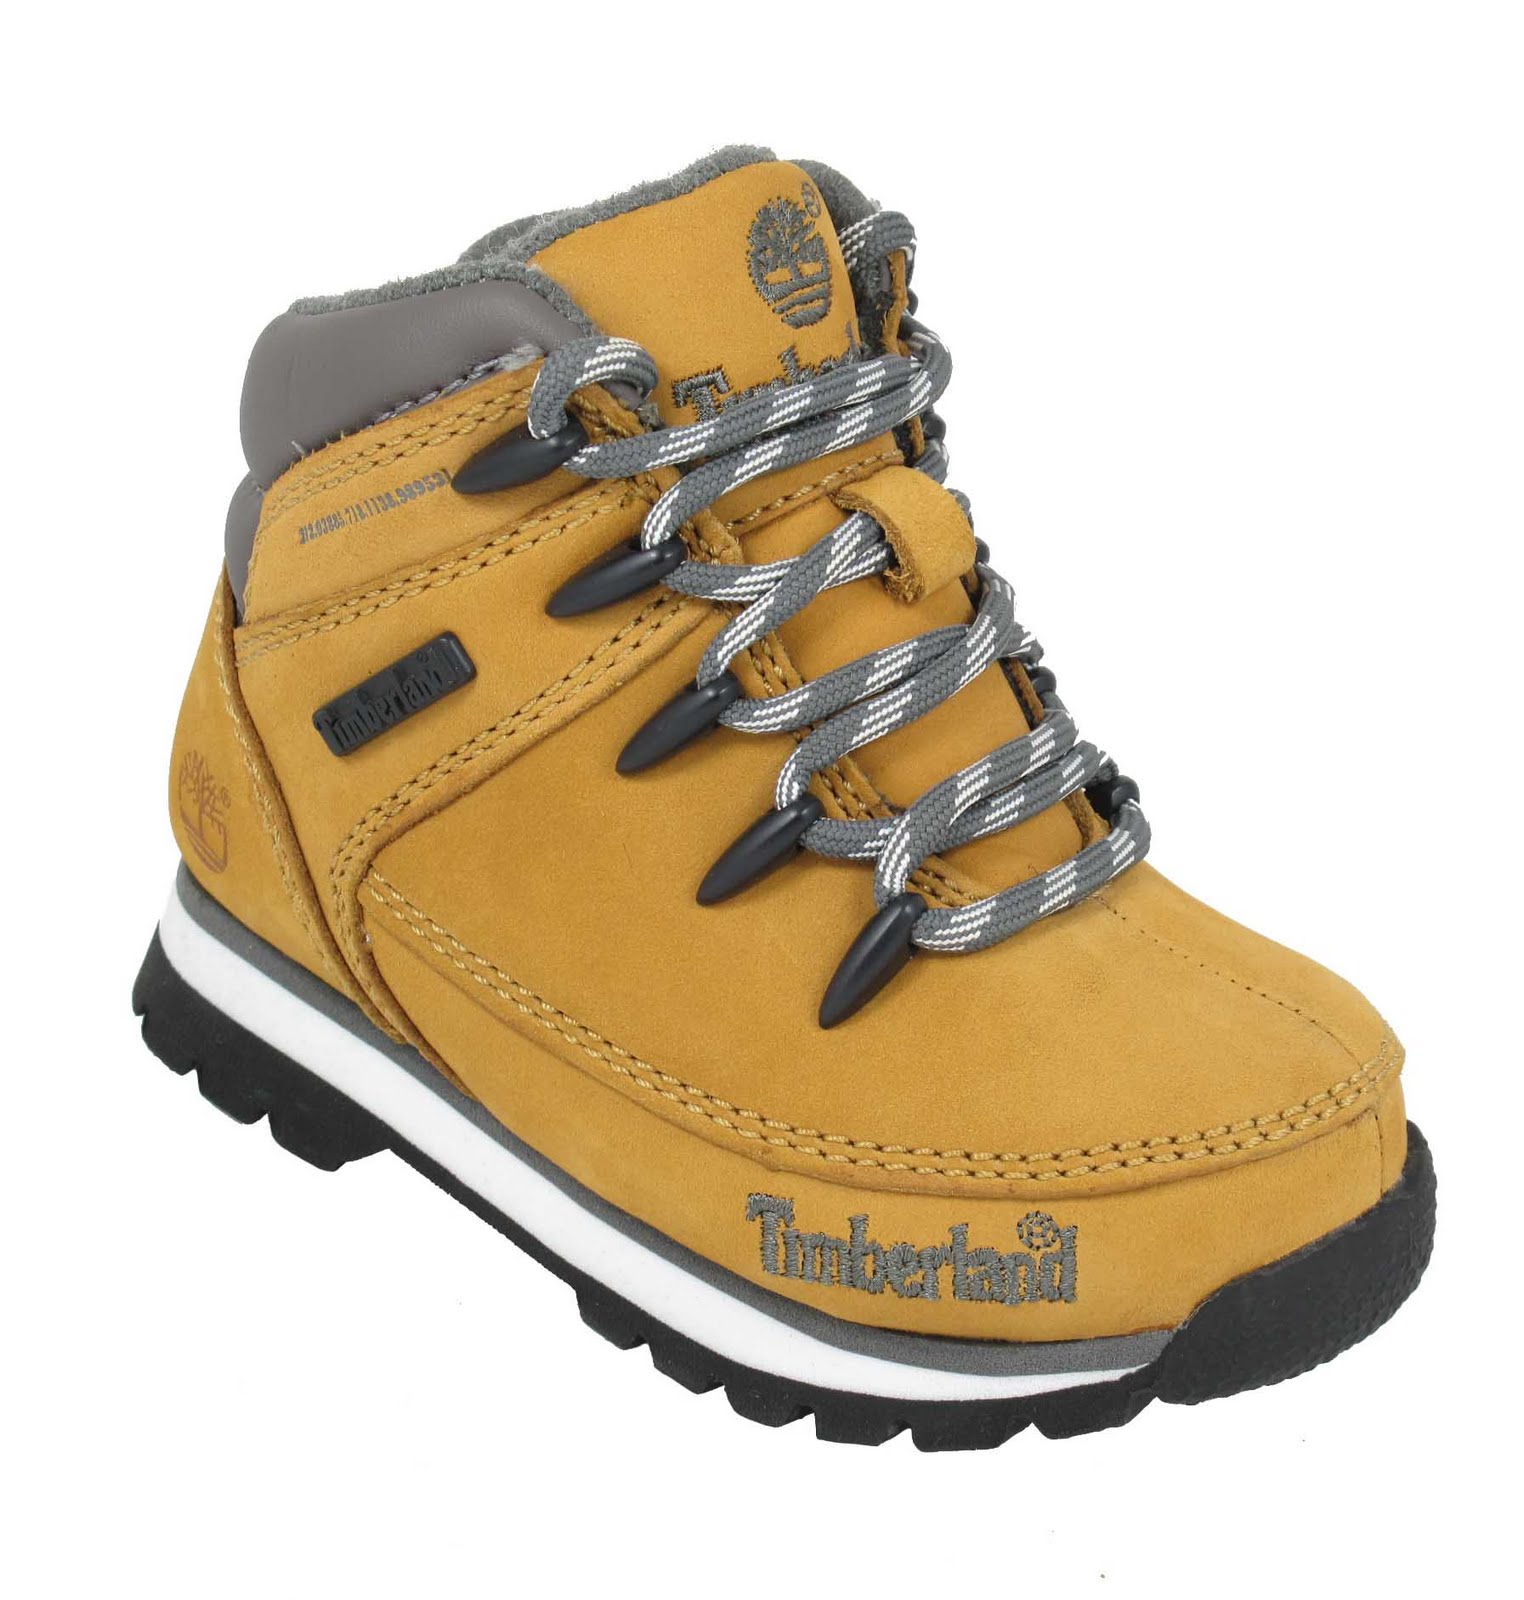 Landau Online: Tmberland Kids Boots for Xmas